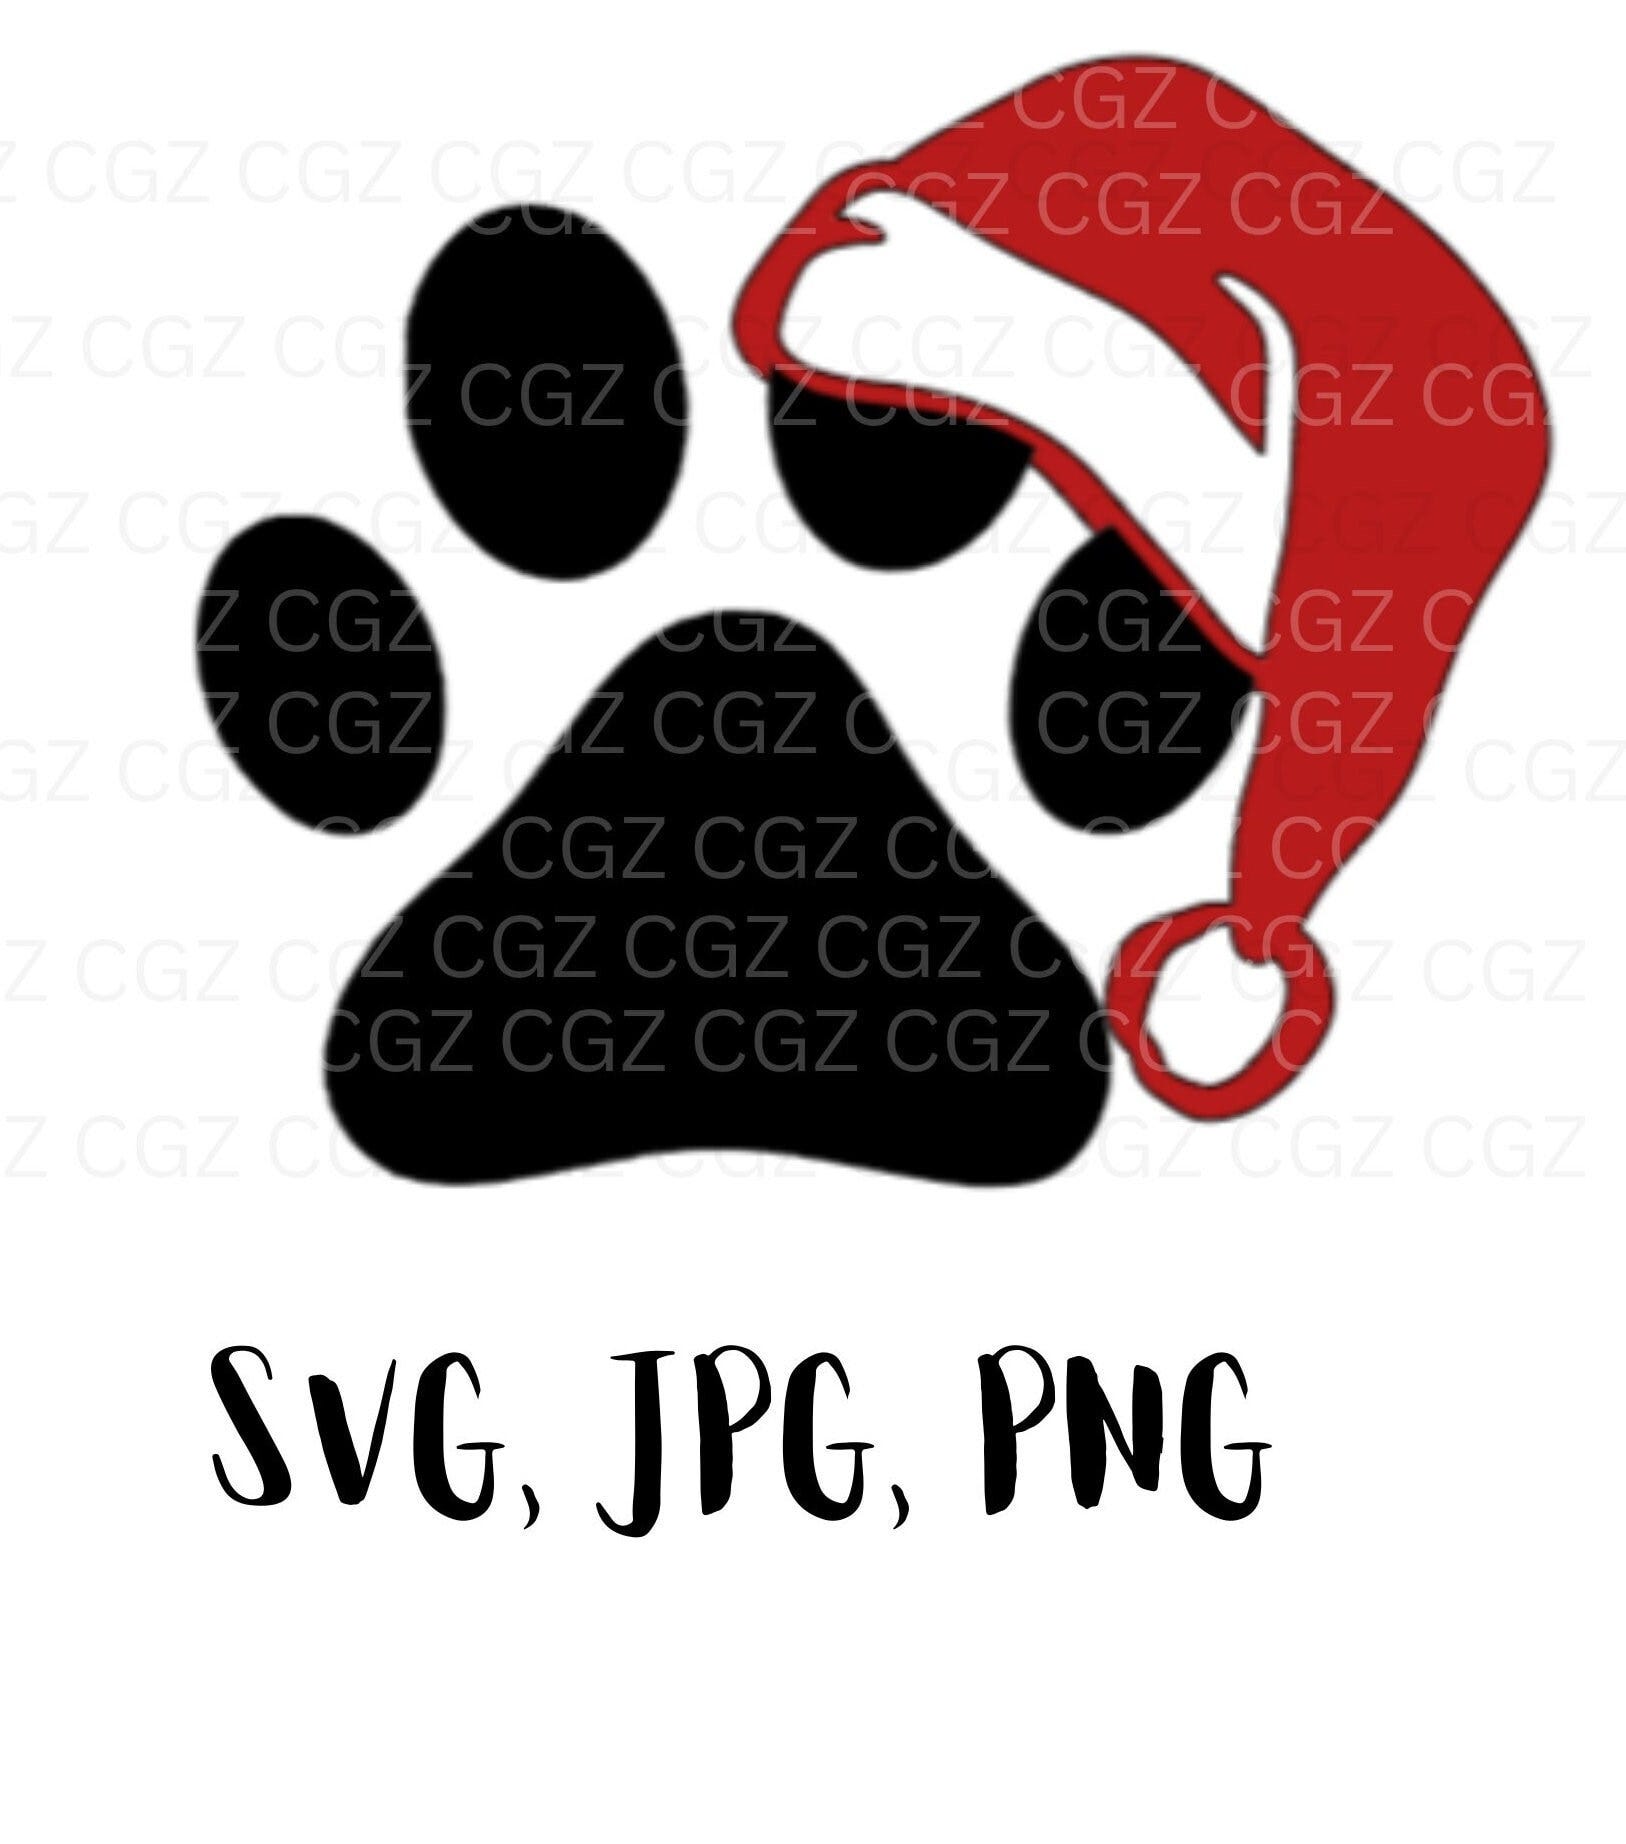 Santa Paw Print SVG/Paw Print Christmas SVG/Paw Print Svg/Paw Print Digital/Christmas Paw Print/Christmas Paw Print/Animal Print